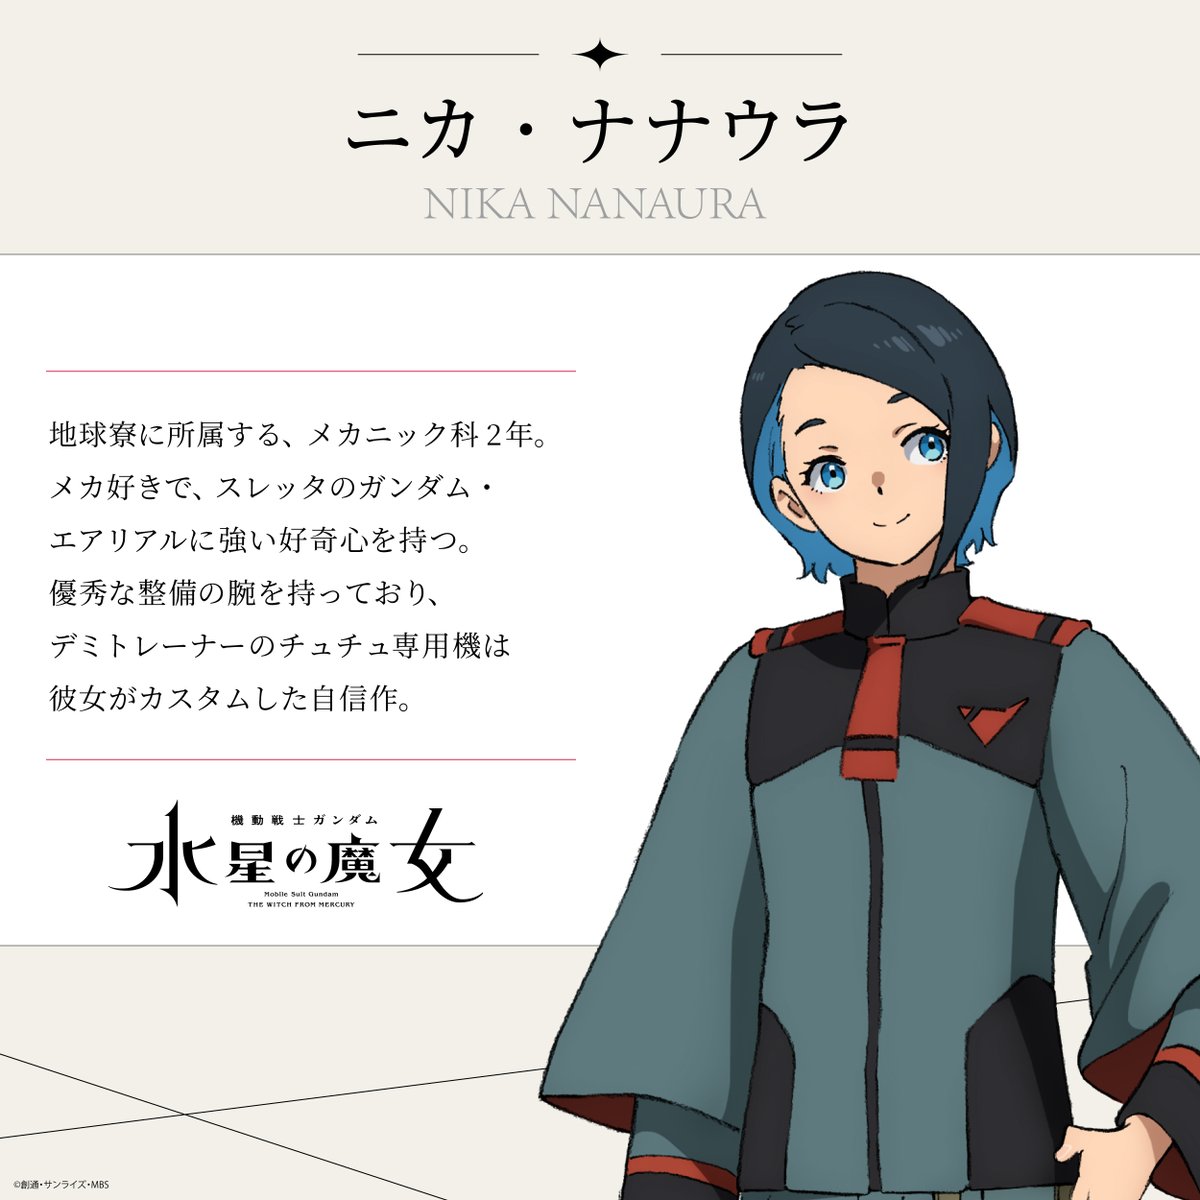 Nika Nanaura